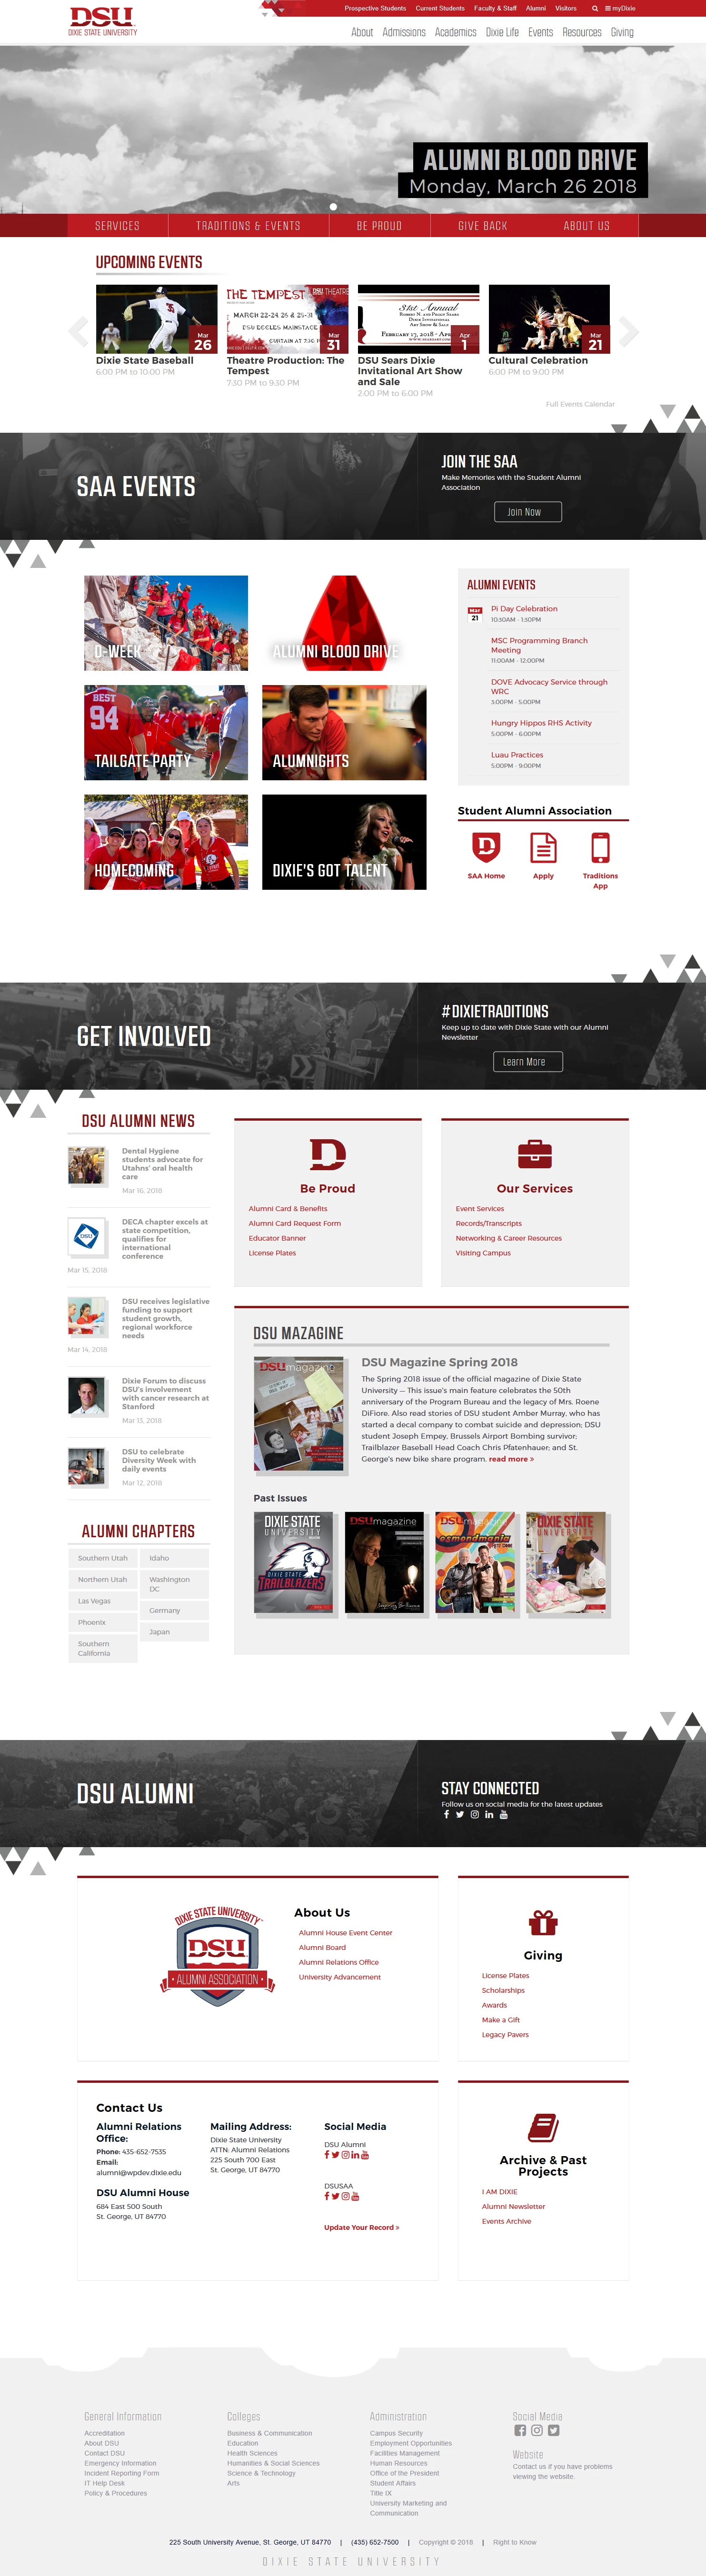 Alumni Portal, Desktop View